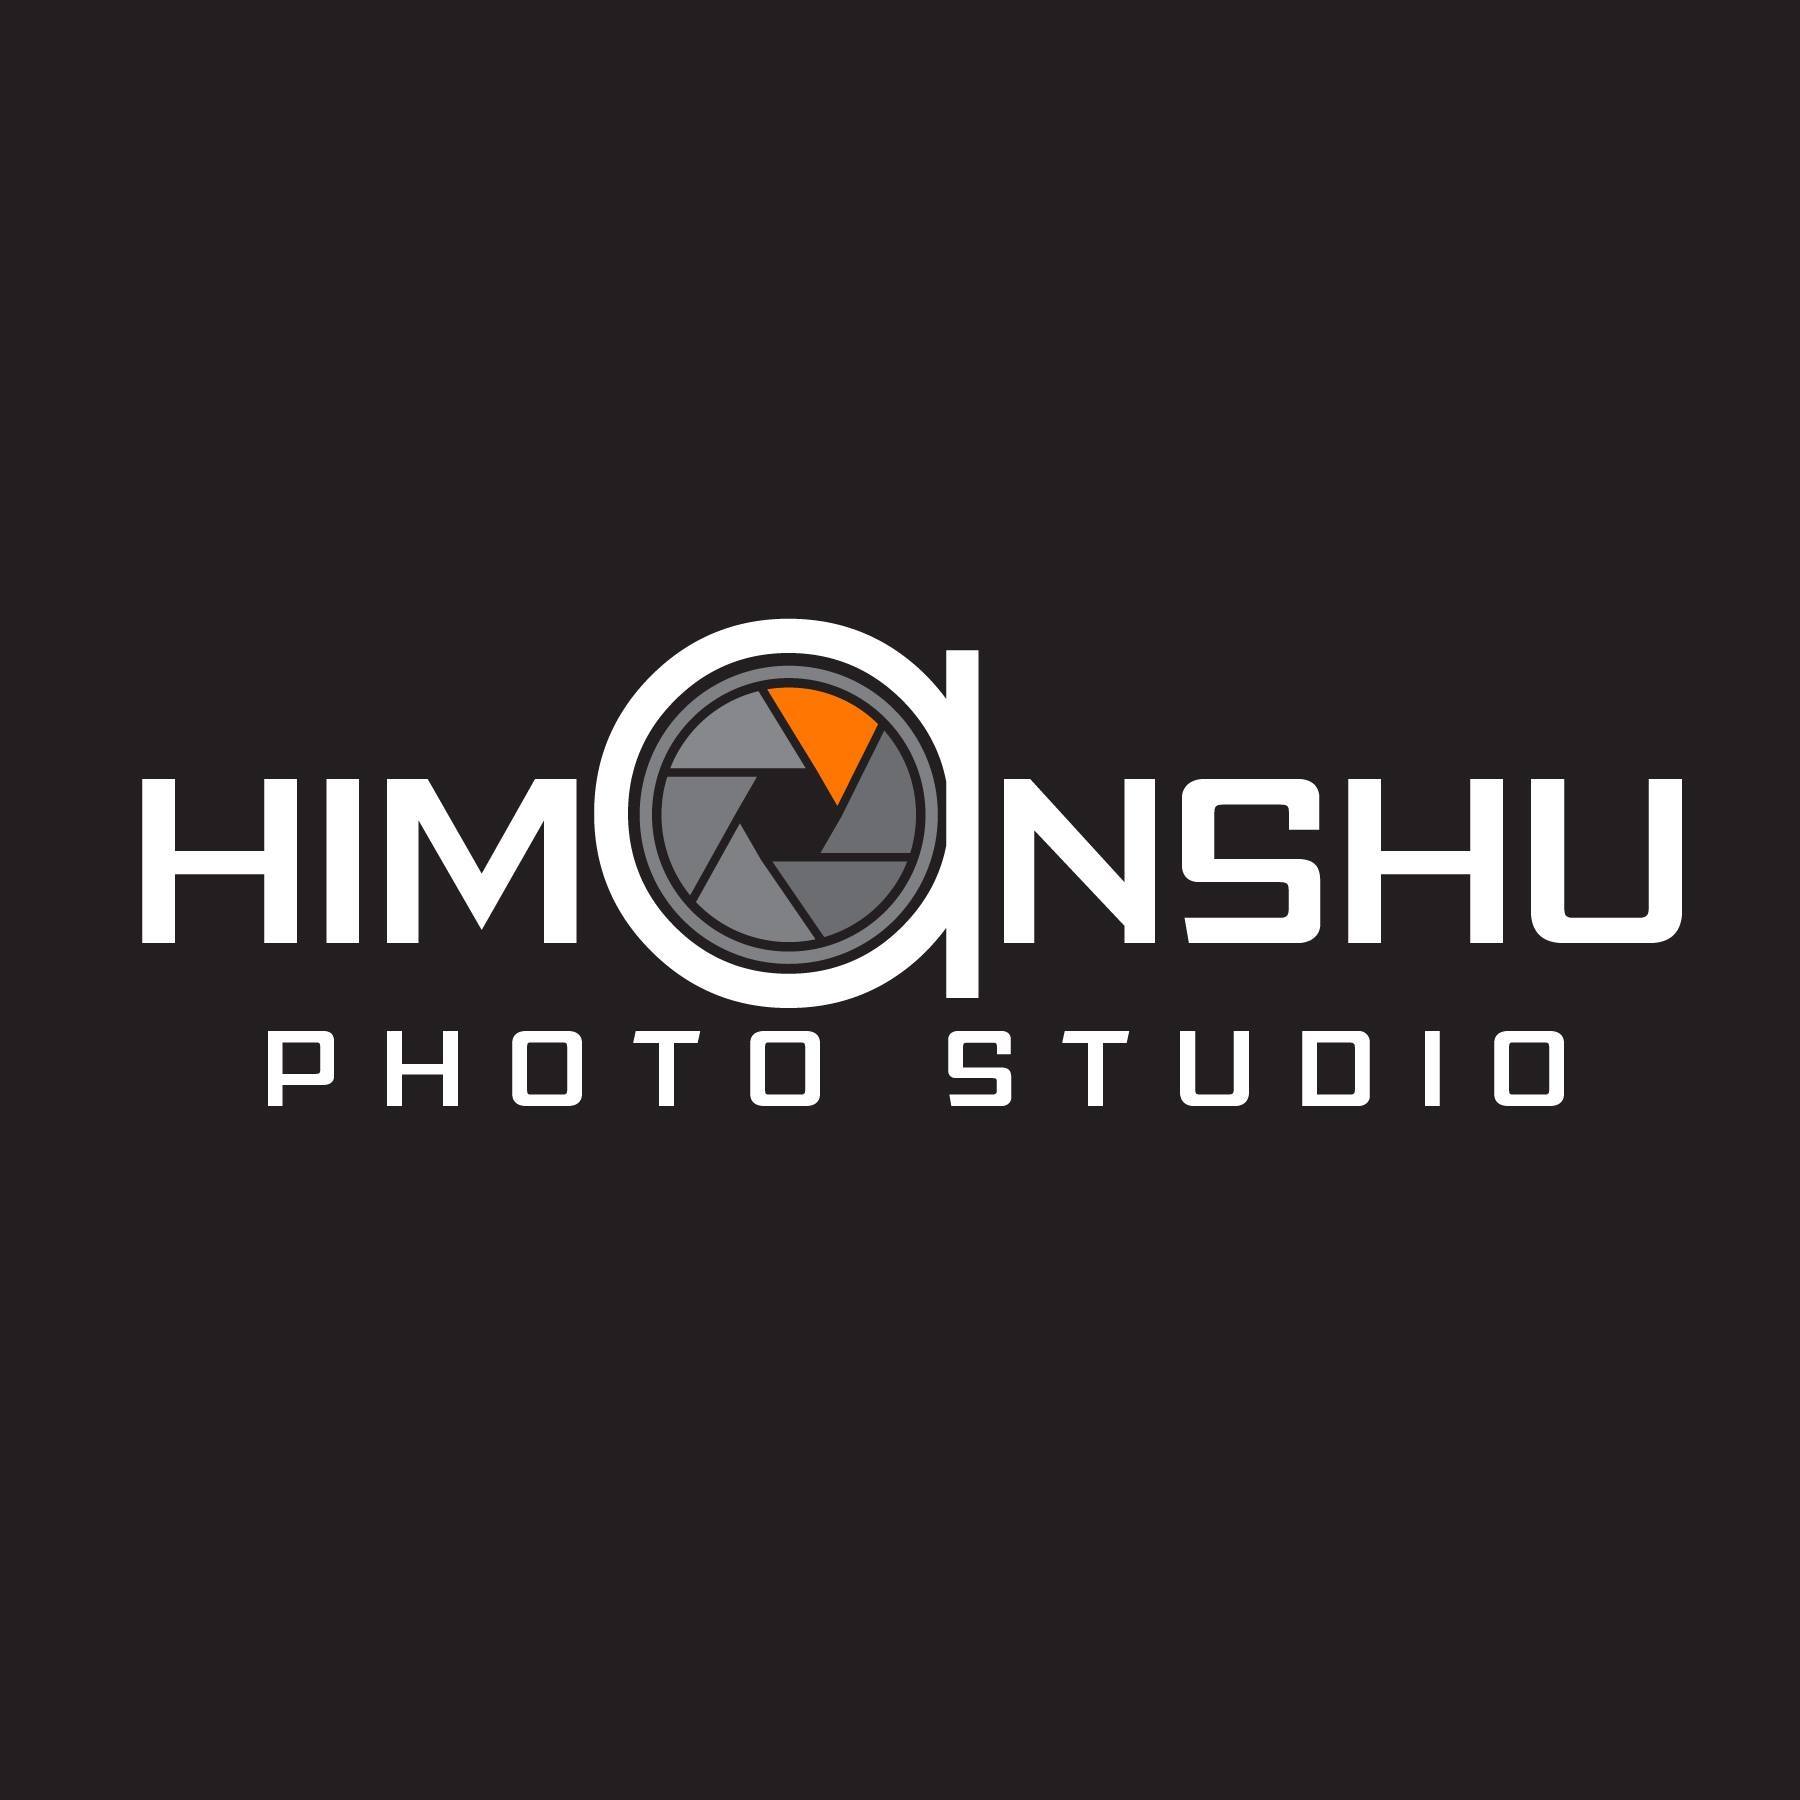 Himanshu Photo Studio Logo